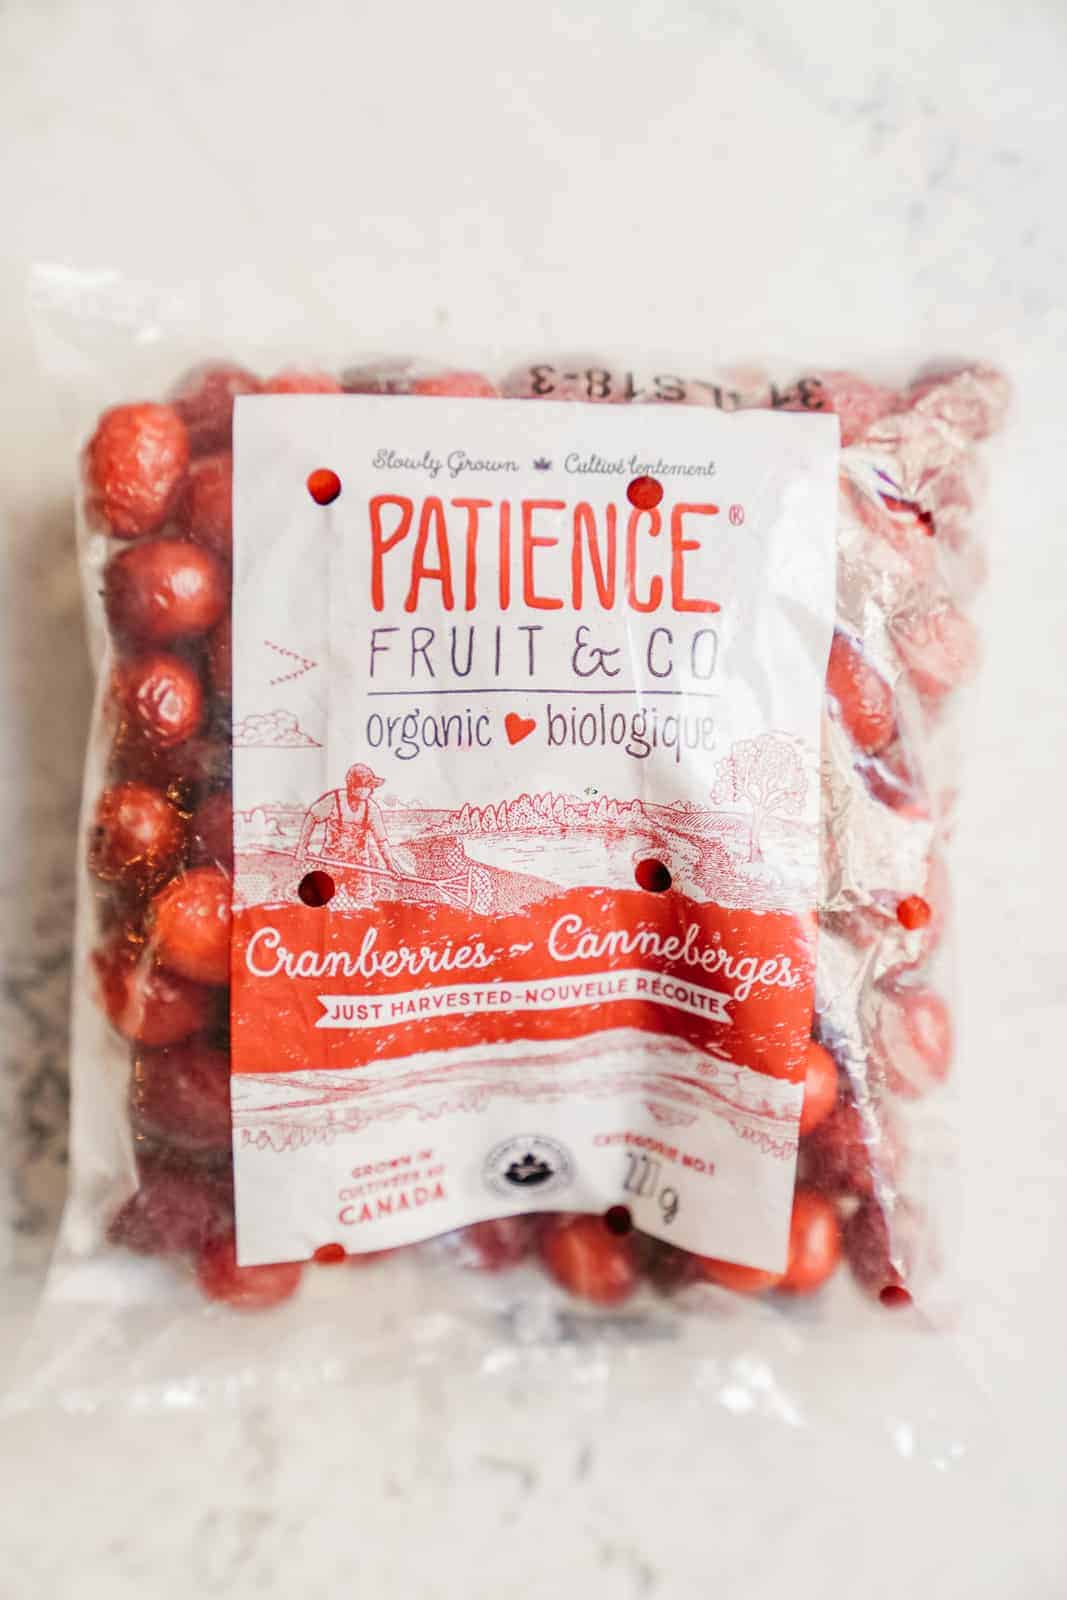 Bag of Patience Fruit & Co. cranberries.